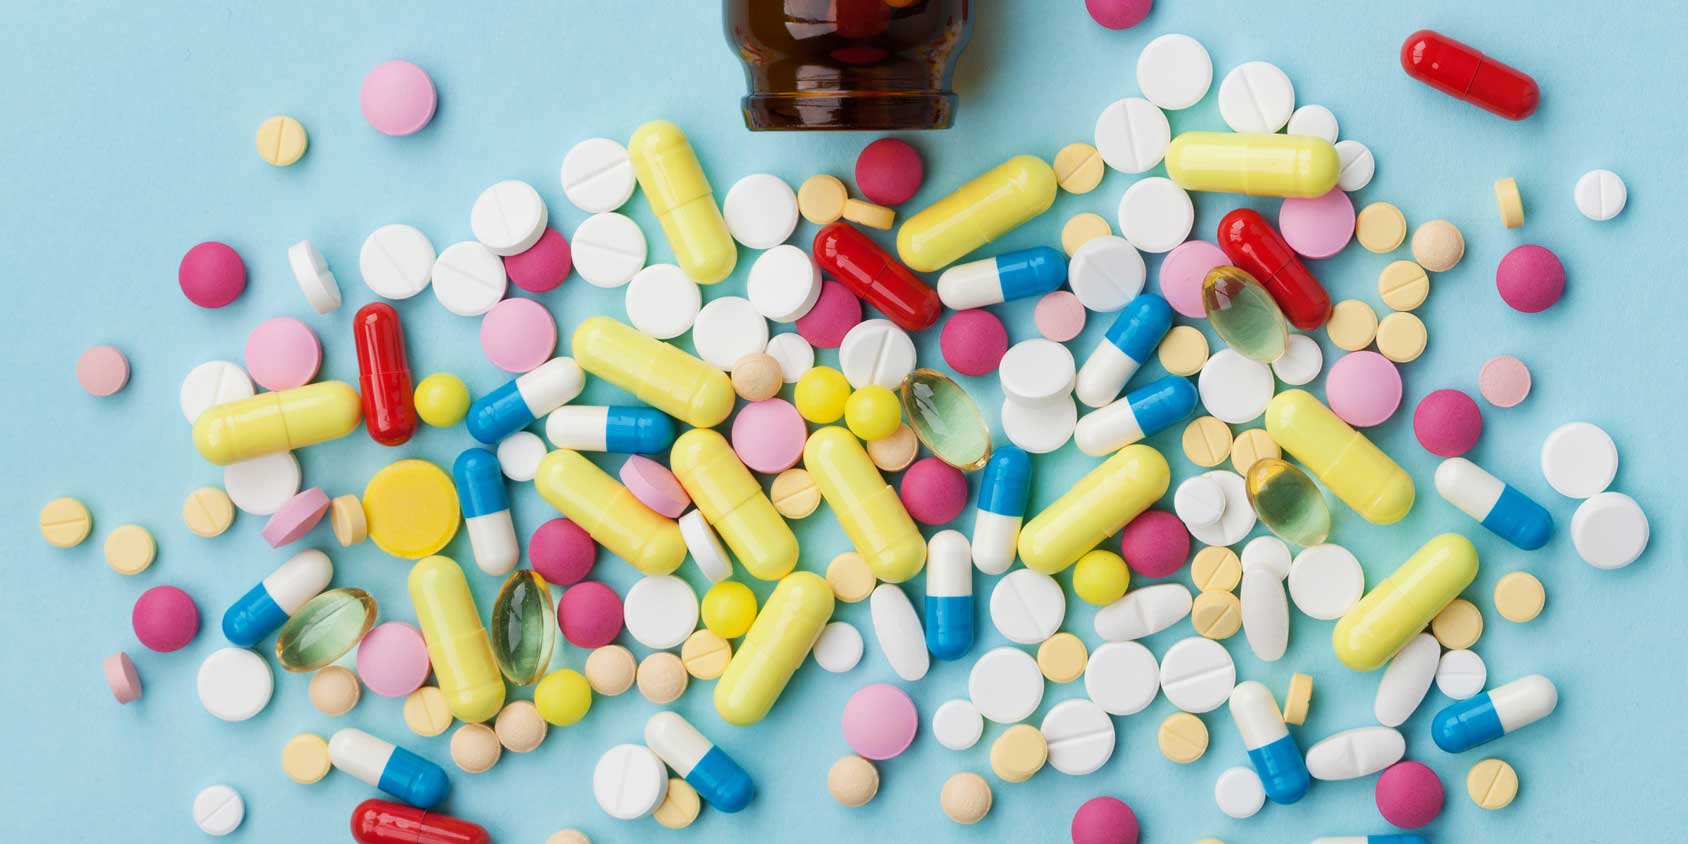 Prescription Drugs Laced with PFAS